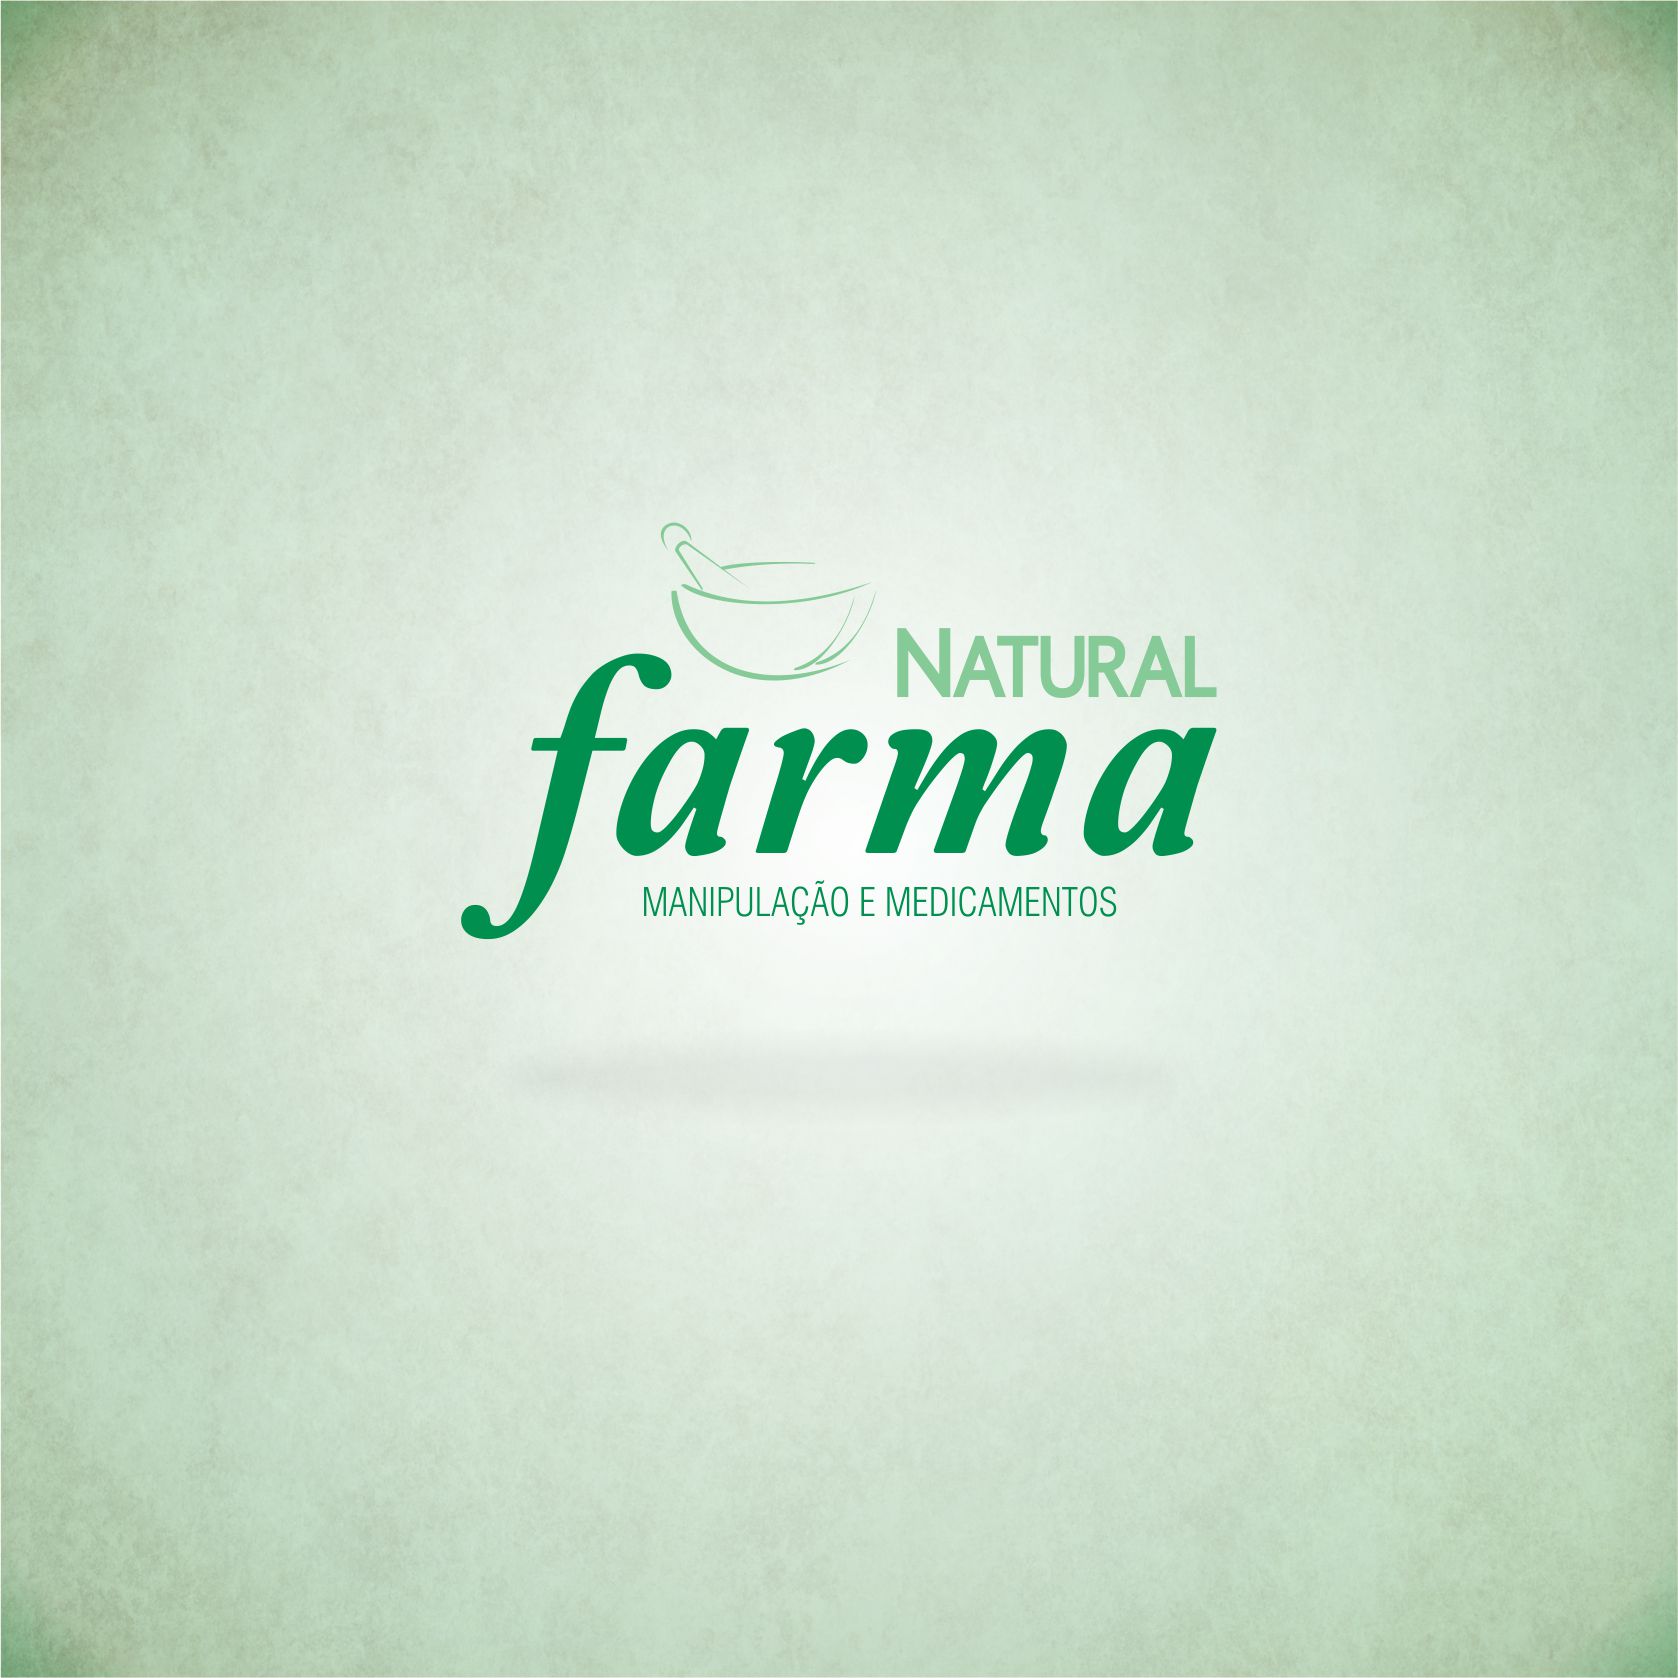 Natural Farma